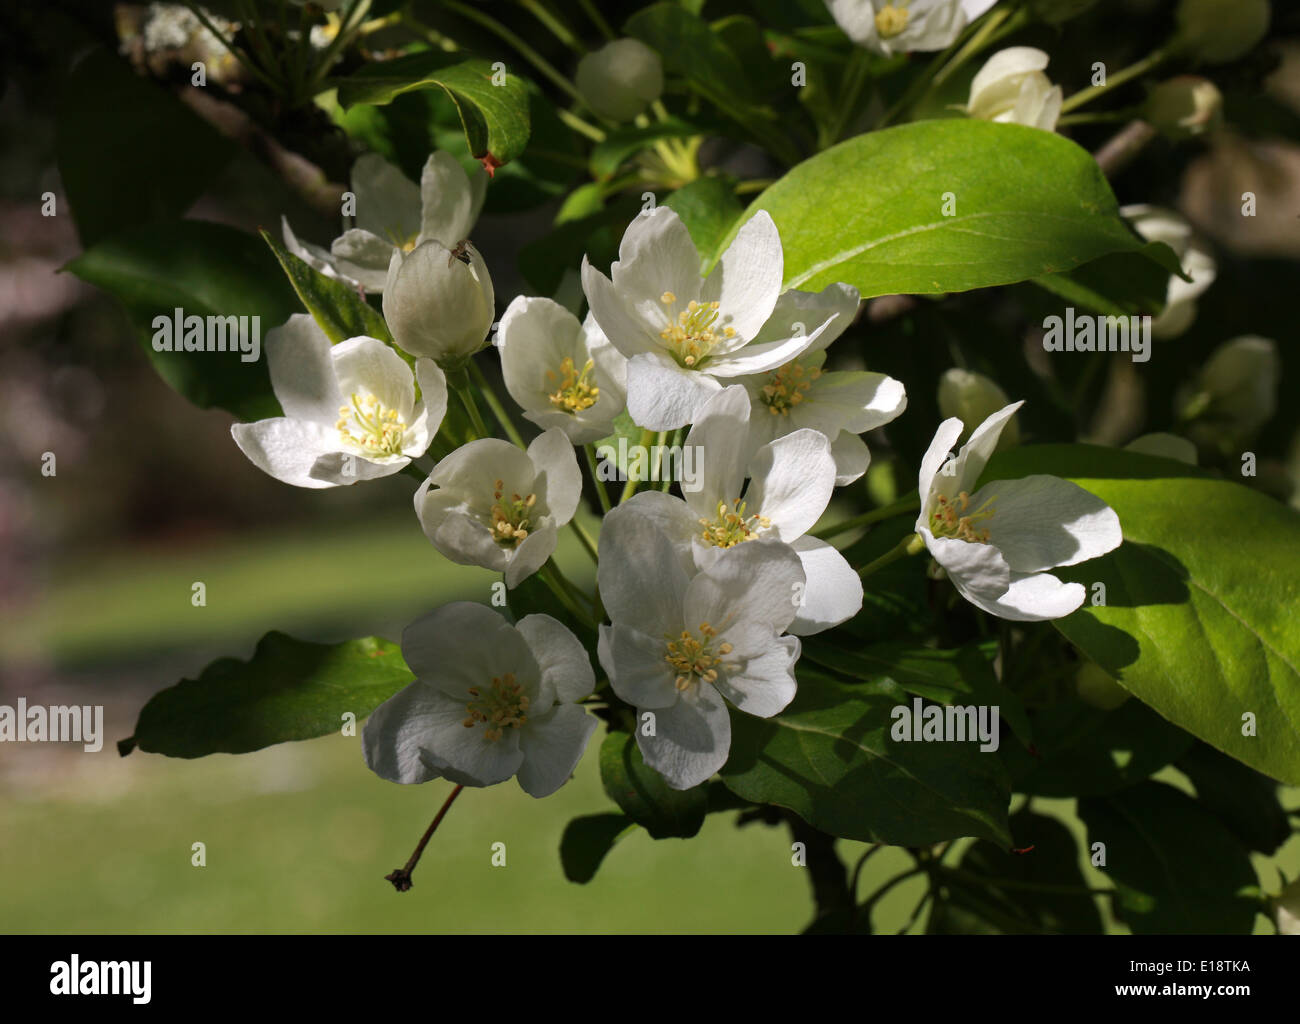 Jack Flowering Crabapple, Jackii Siberian Crabapple, Korean Crabapple, Malus baccata var. jackii, Rosaceae. Korea. Stock Photo